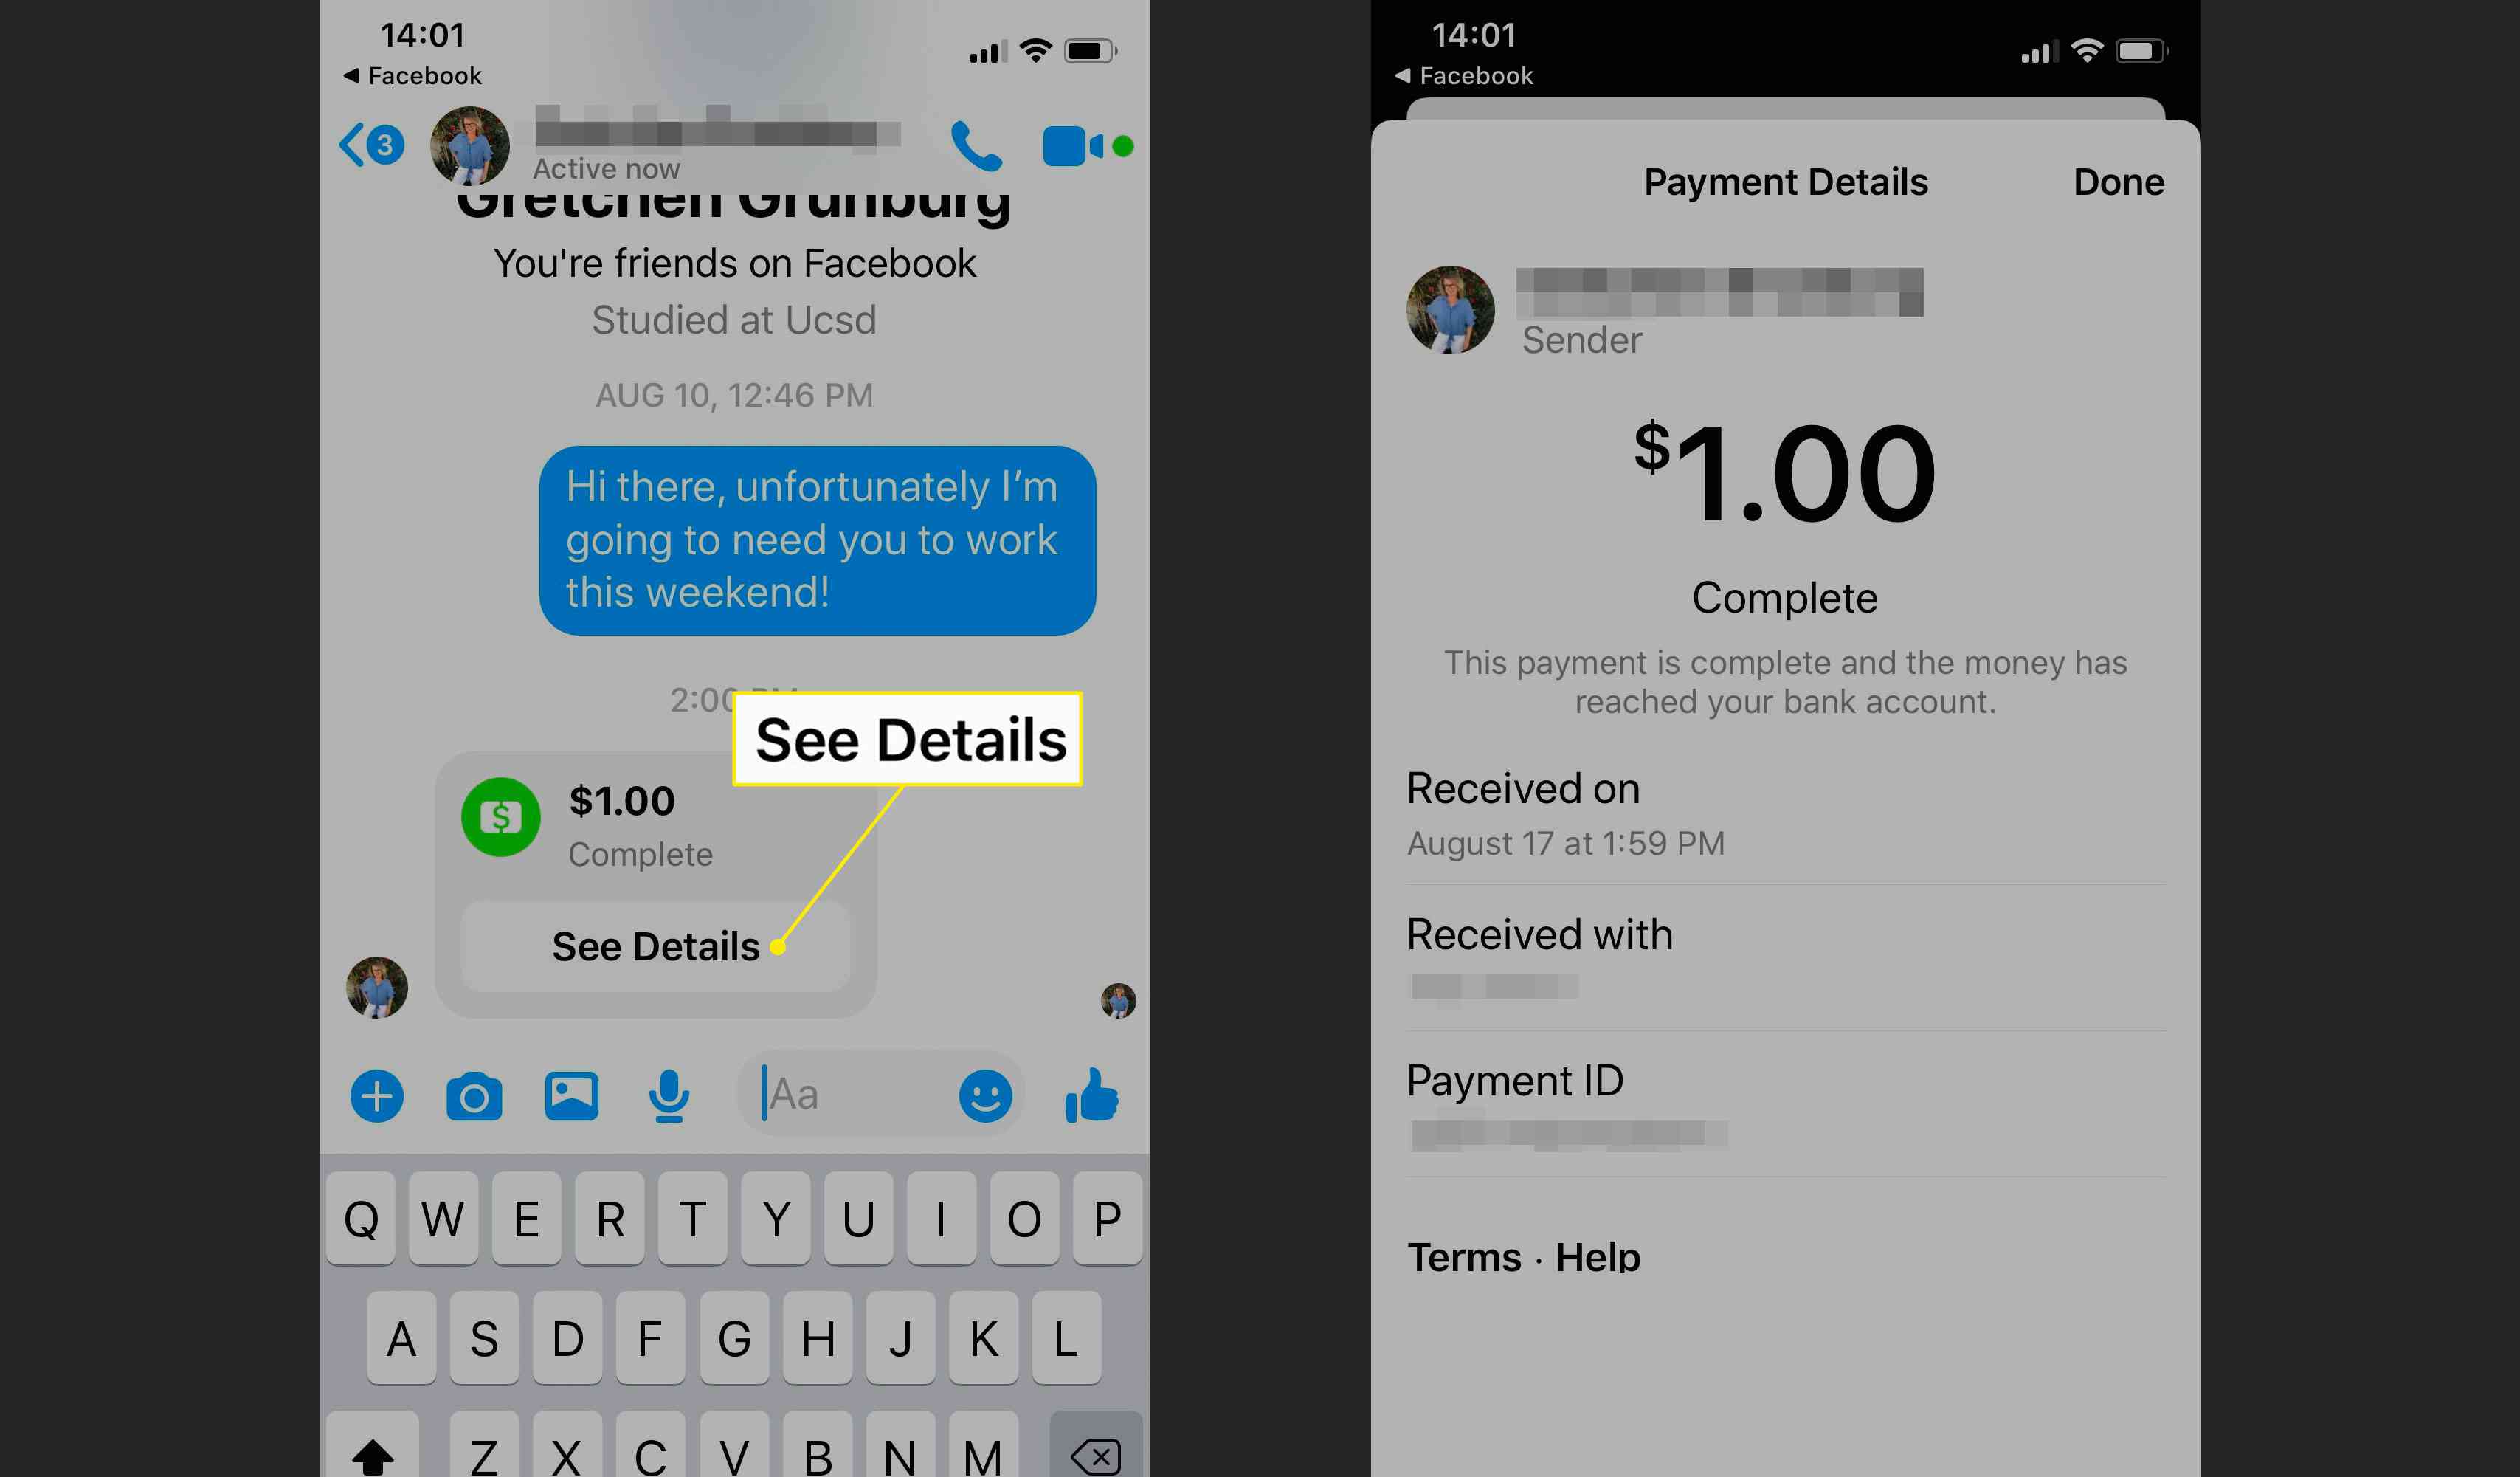 Viz Podrobnosti v potvrzení o platbě v aplikaci Messenger